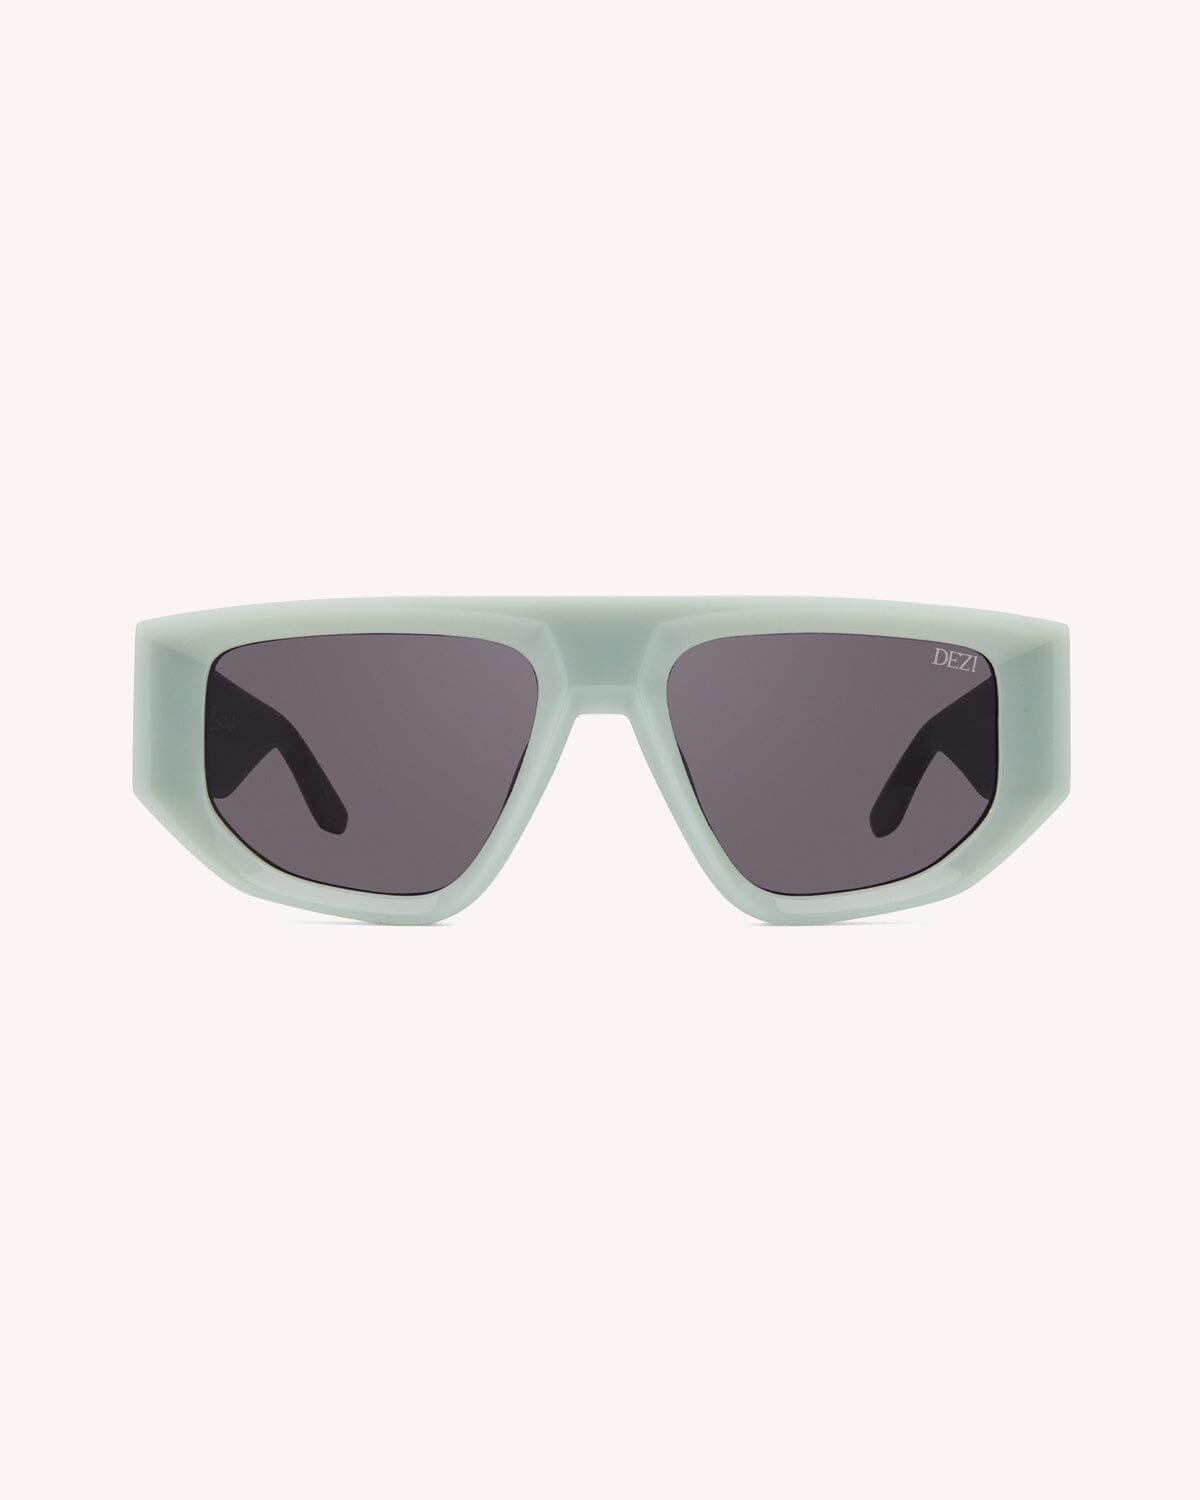 Dezi Sunglasses Backtrack in Honey Faded Color | Color: Brown | Size: Os | Jenesismm's Closet